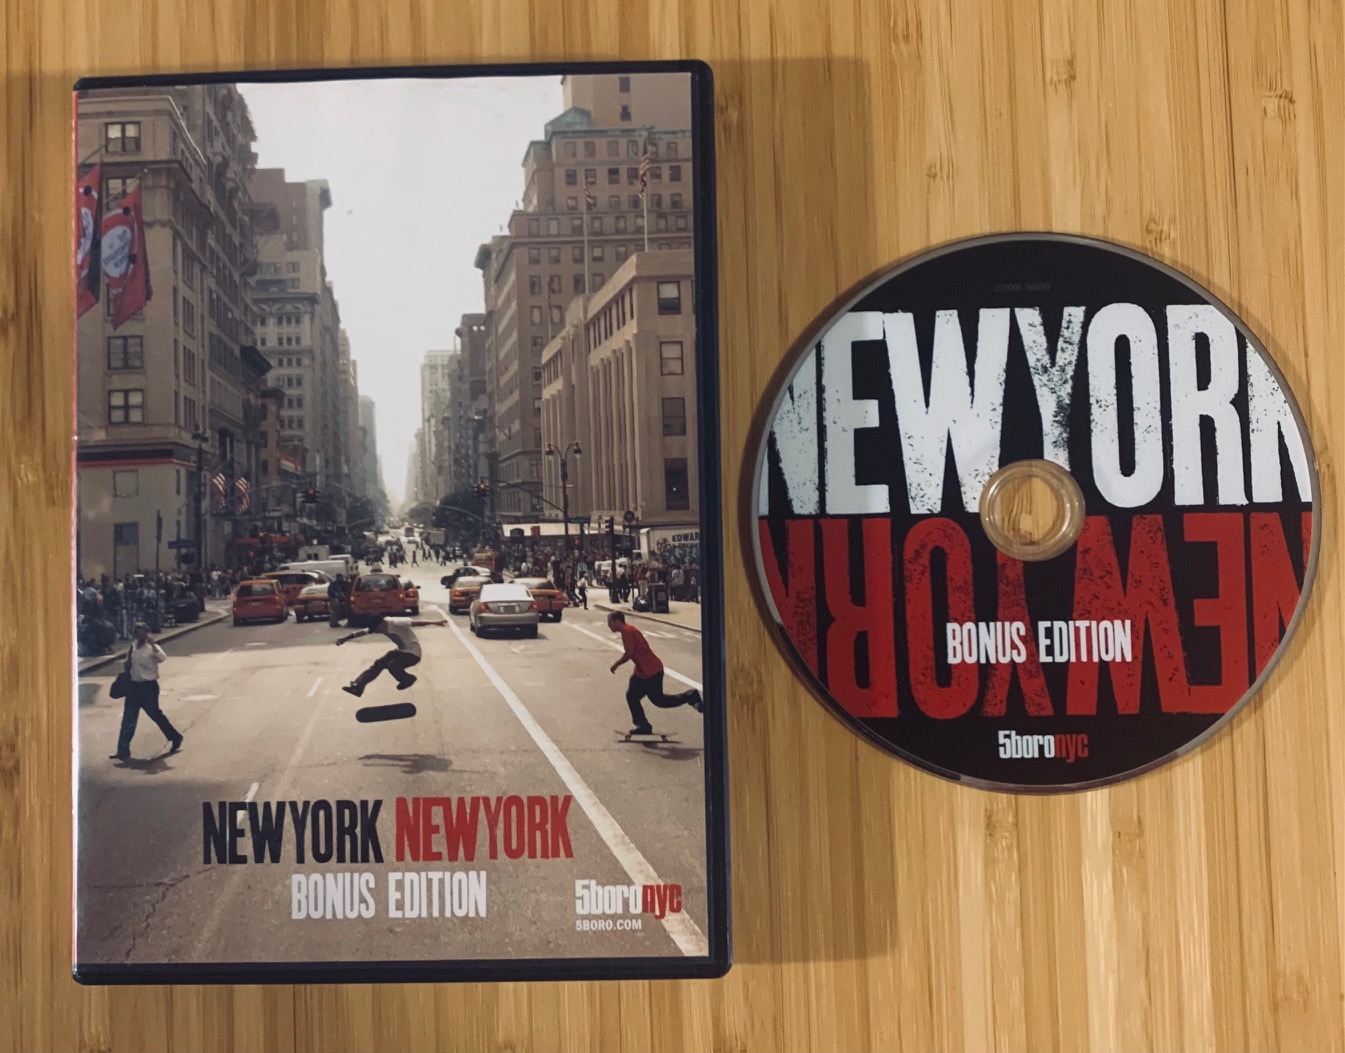 5boro - New York New York cover art